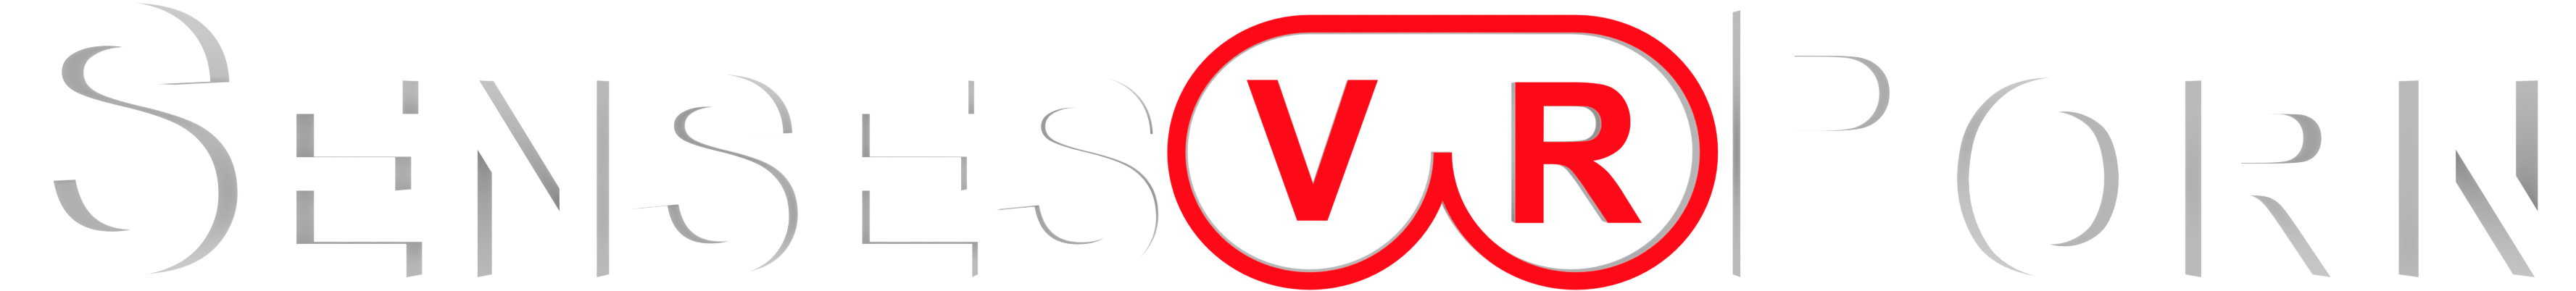 sensevrporn logo